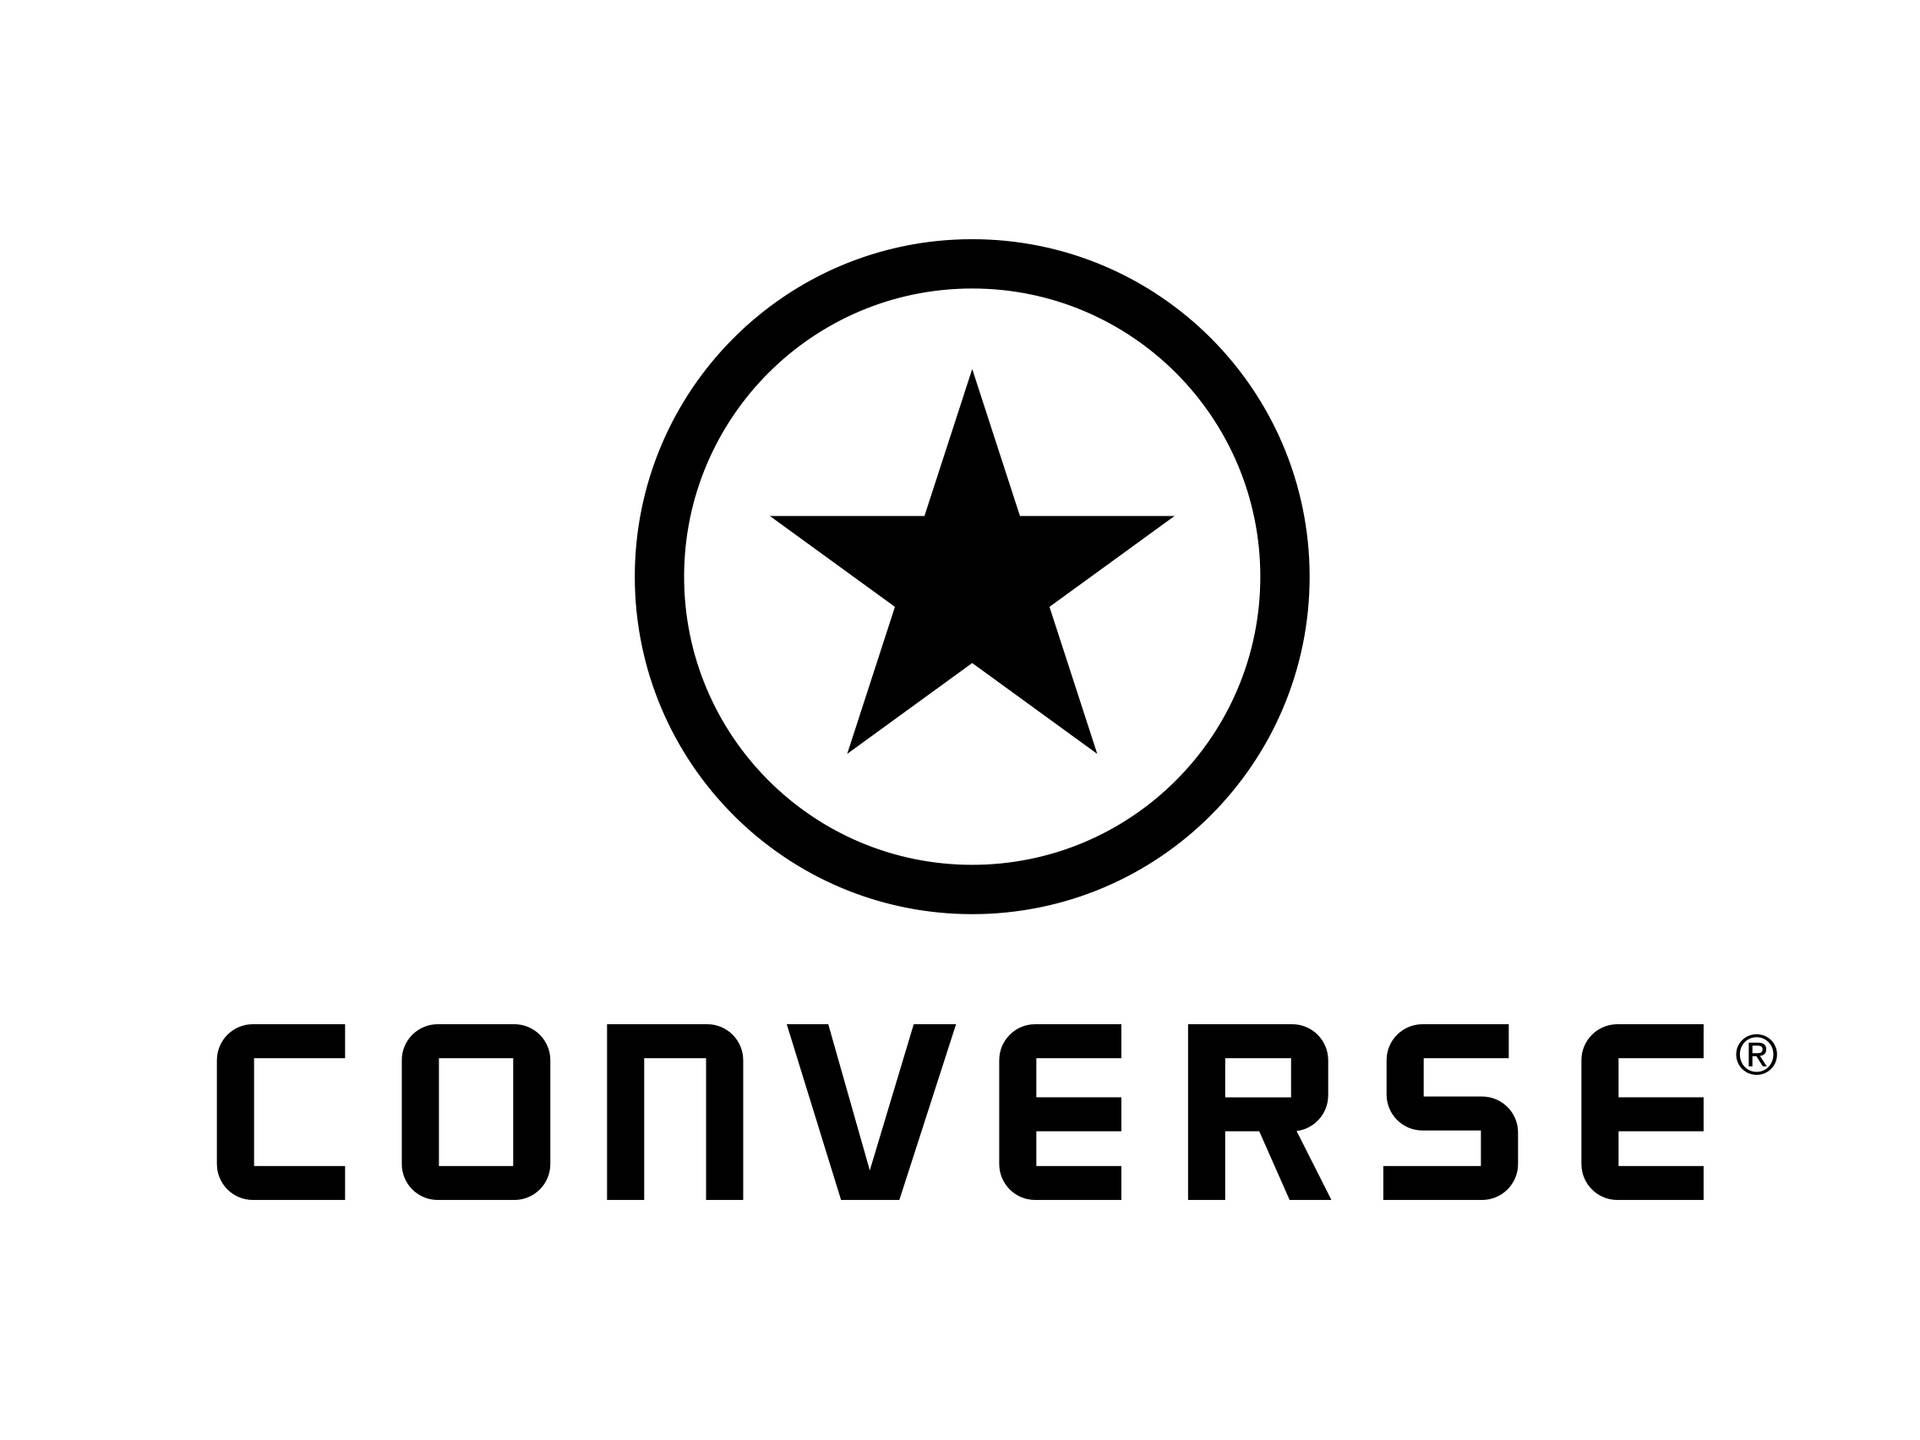 2003 Black Converse Logo Wallpaper